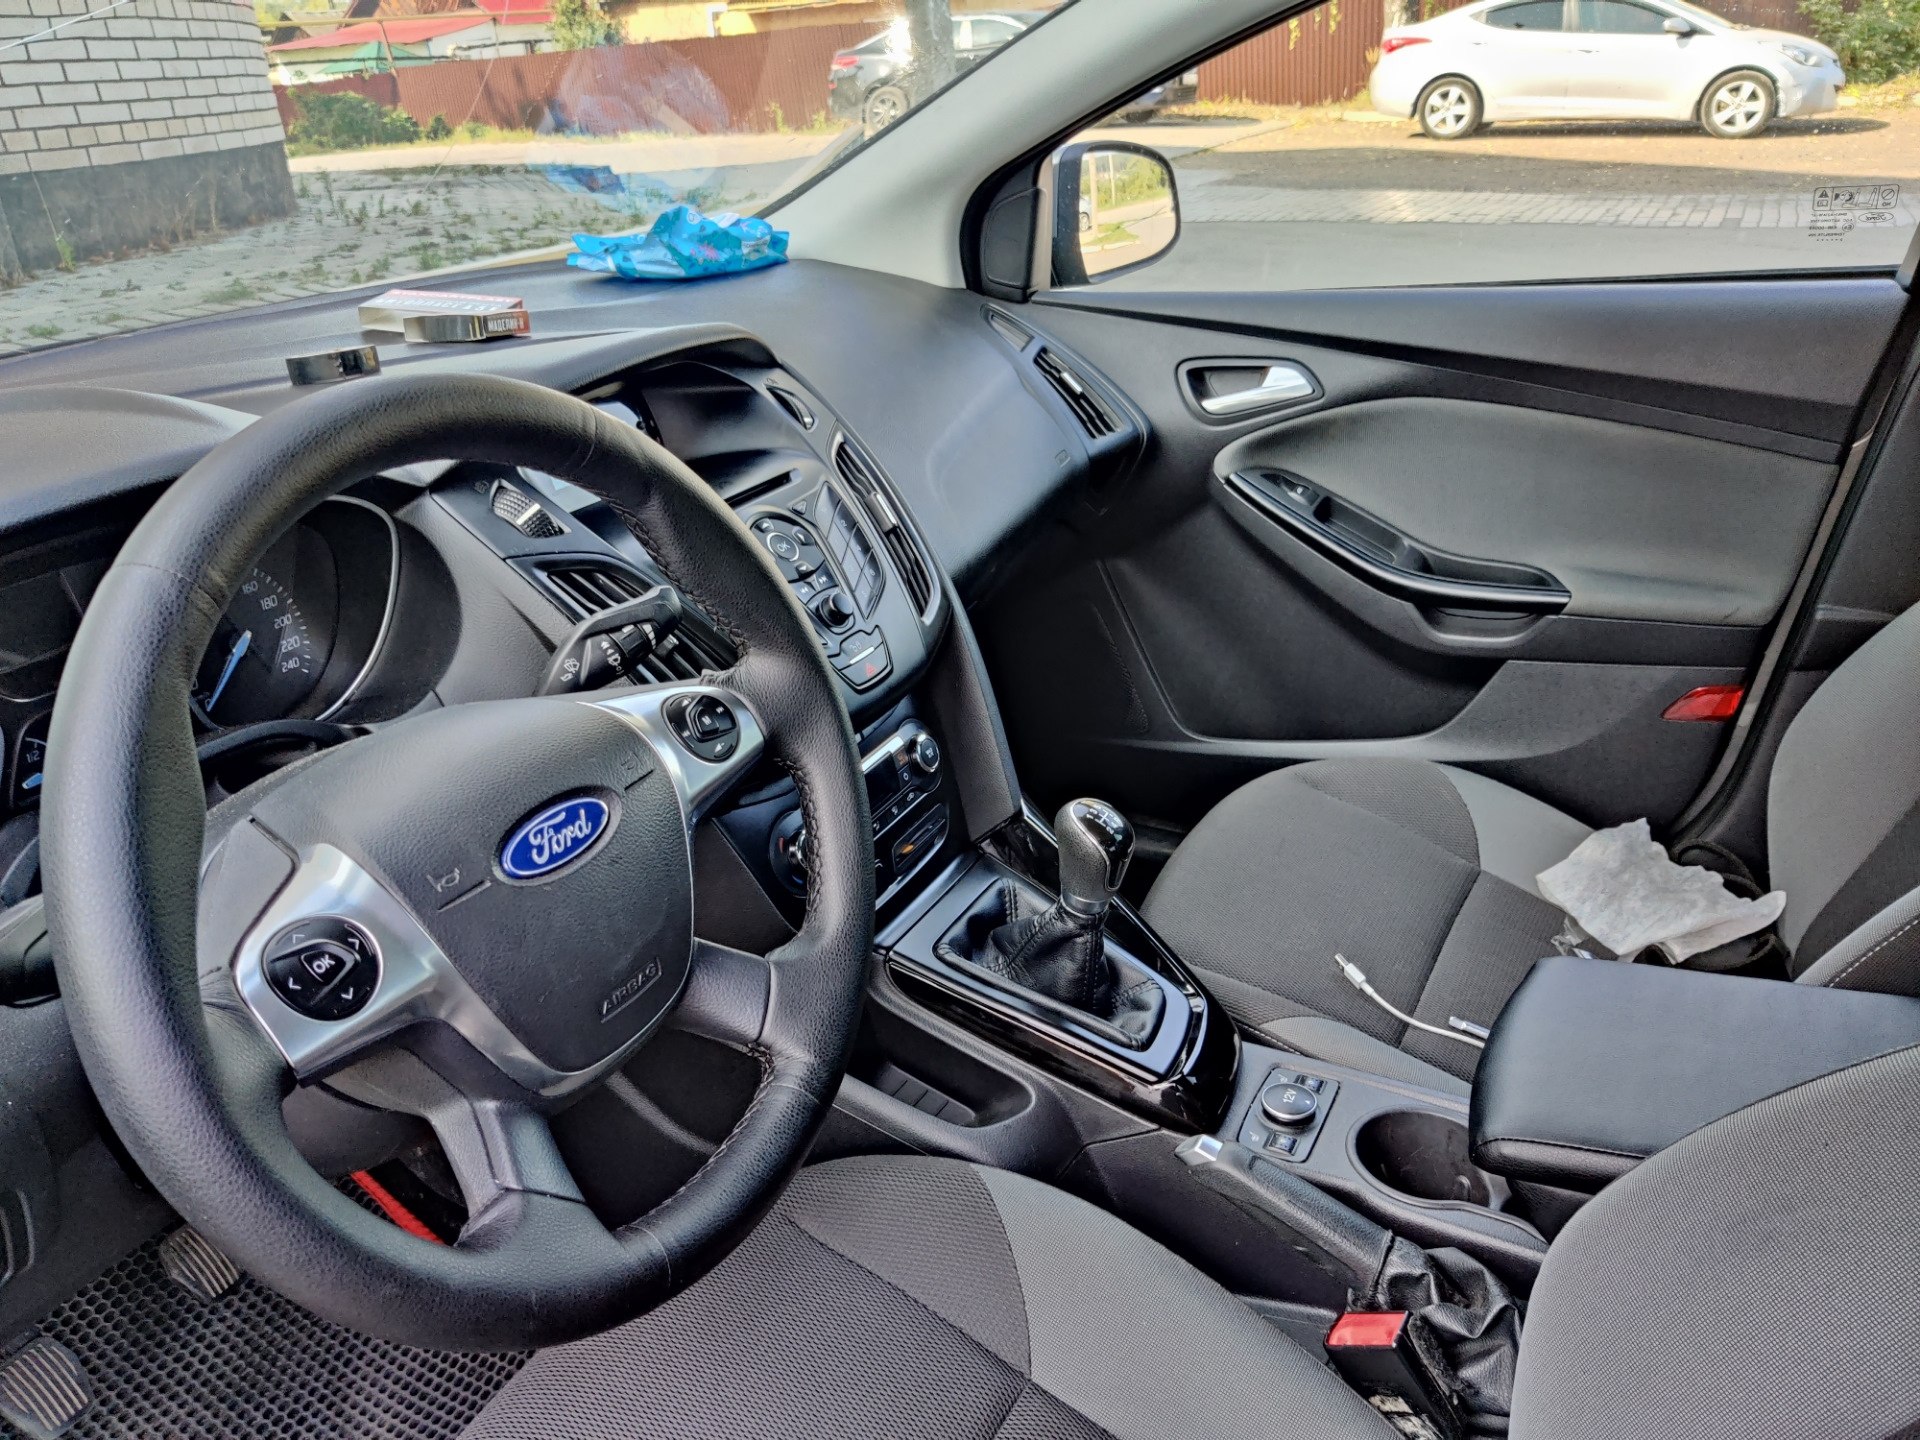 Ford Focus 3 седан салон